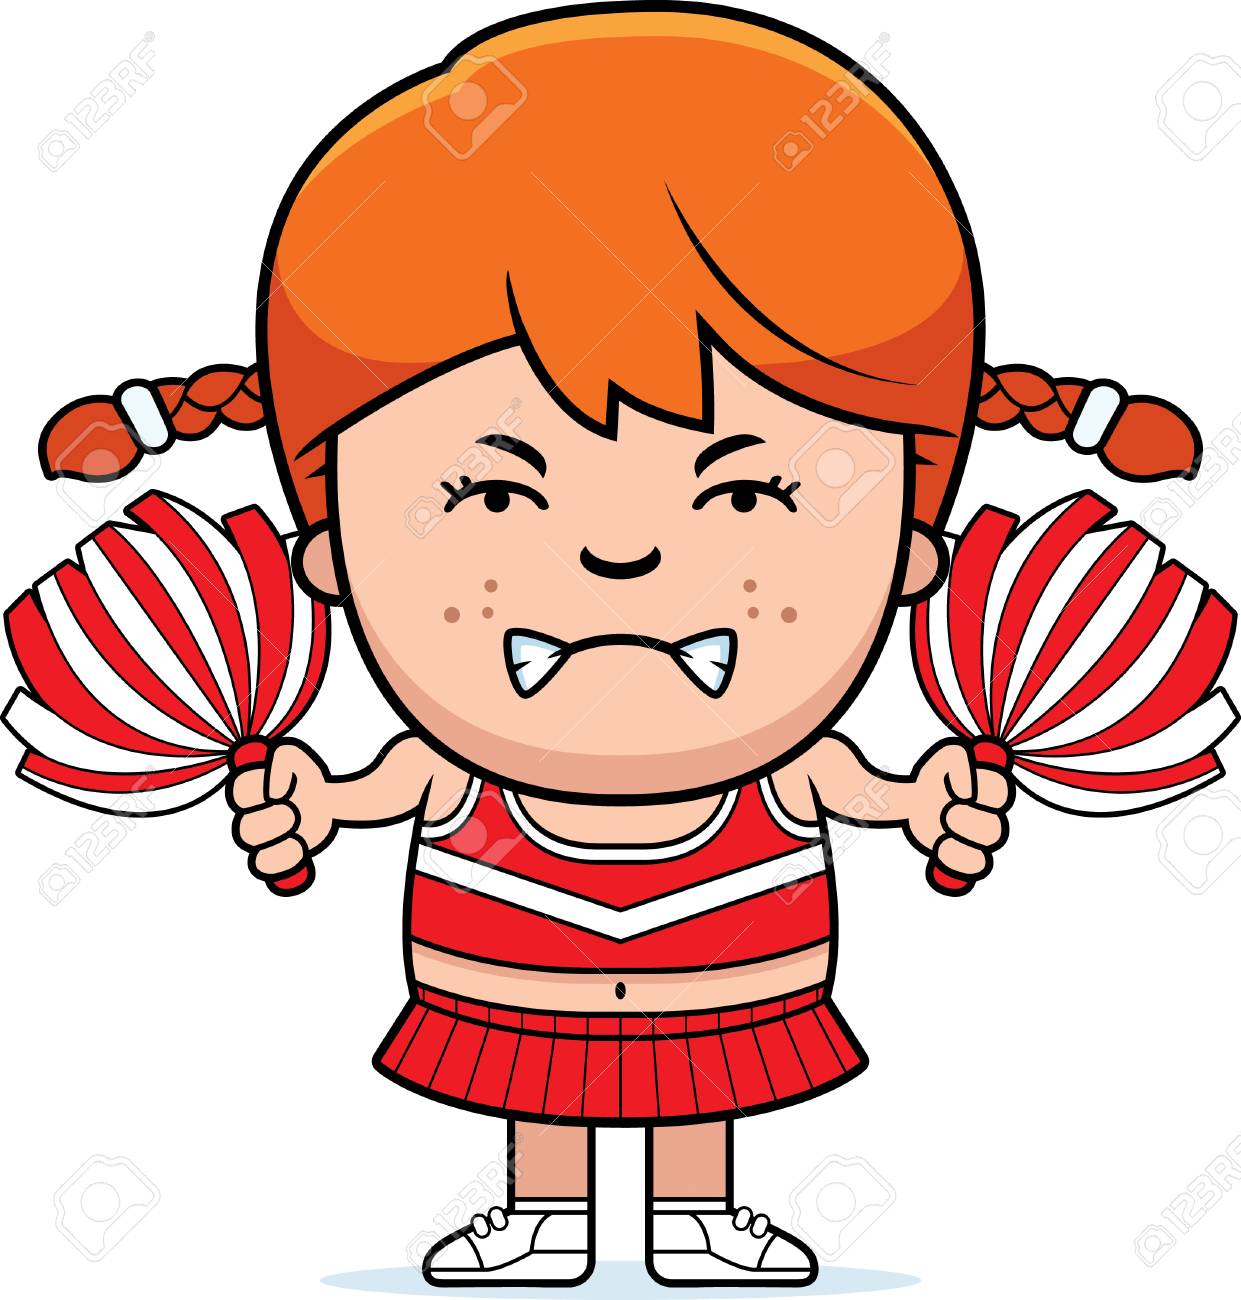 42828675-a-cartoon-illustration-of-a-little-cheerleader-looking-angry-.jpg